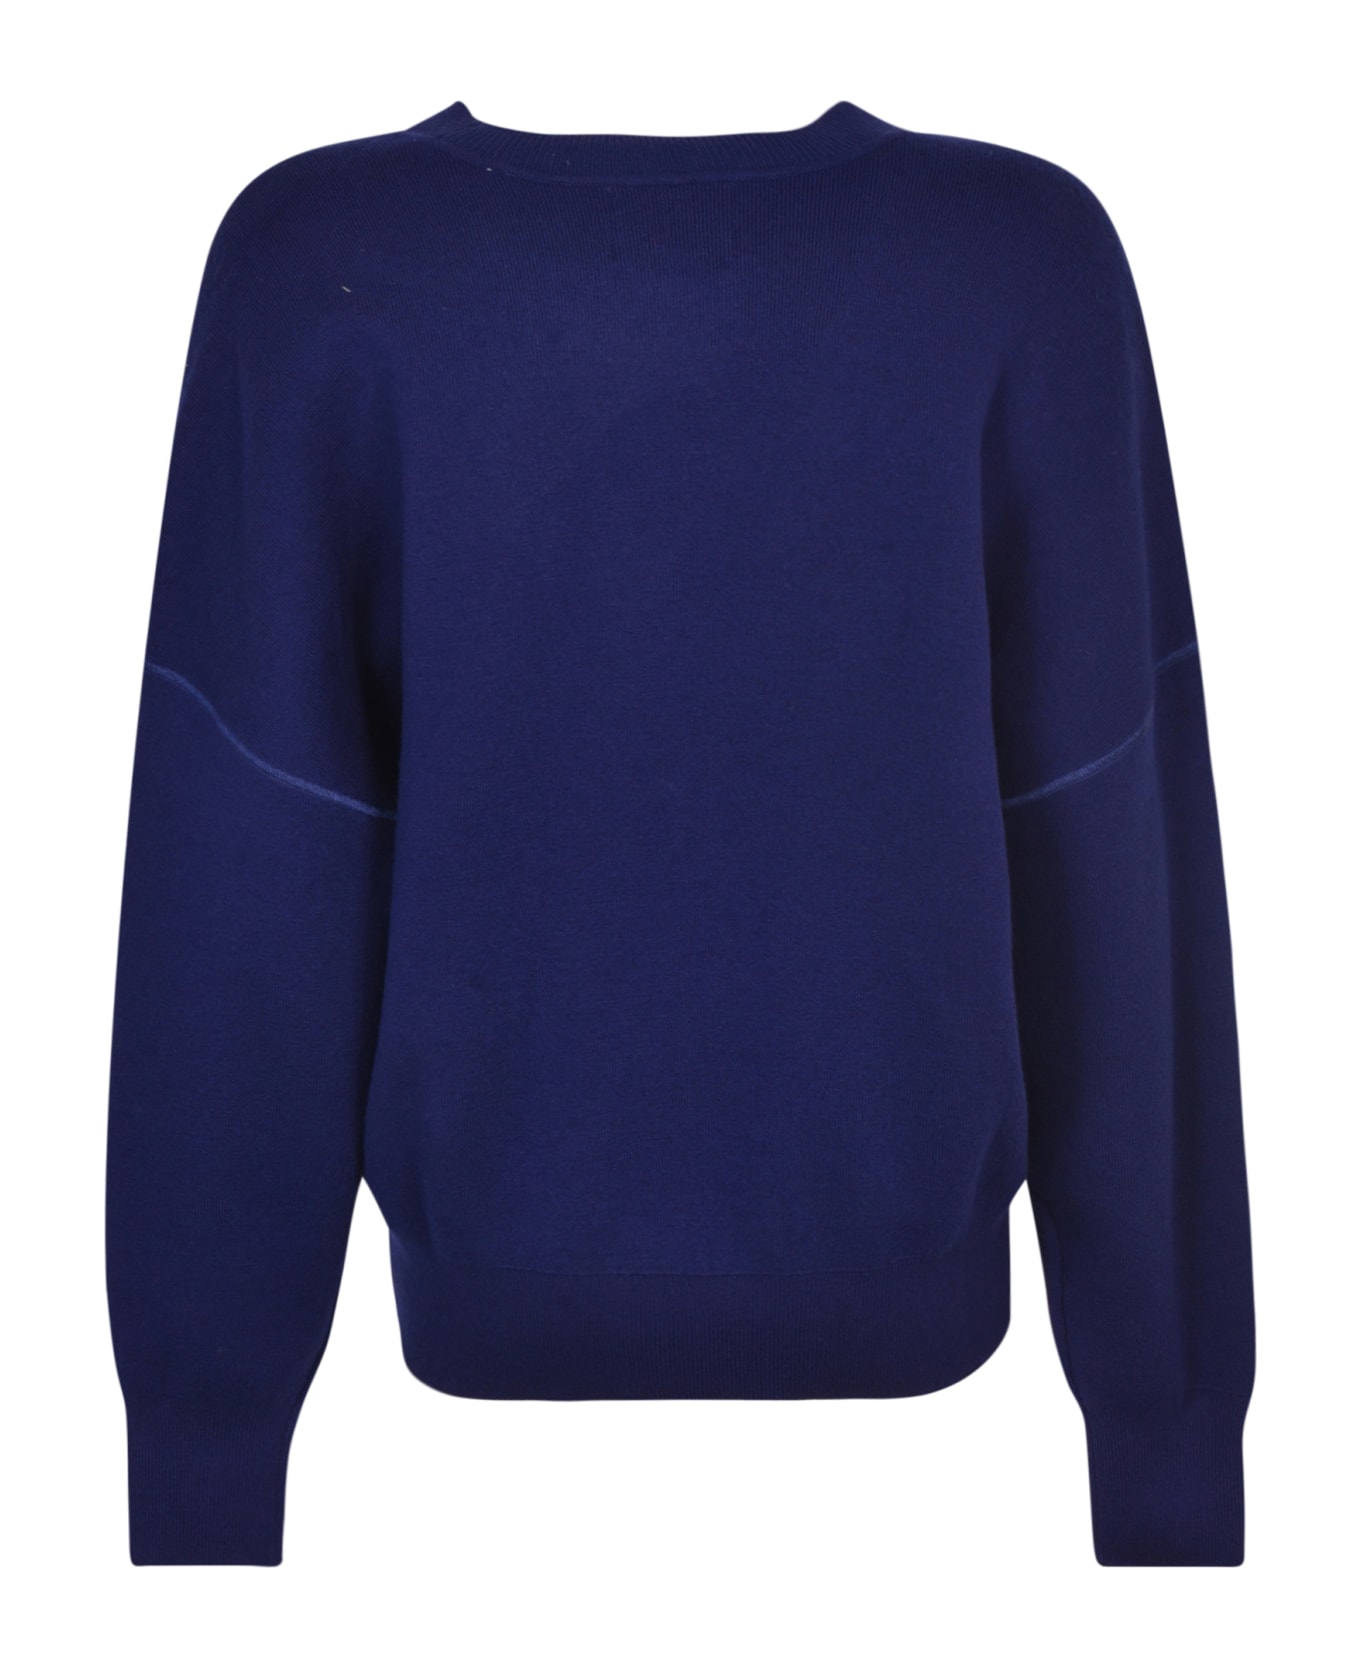 Marant Étoile Atlee Sweater - Blue フリース